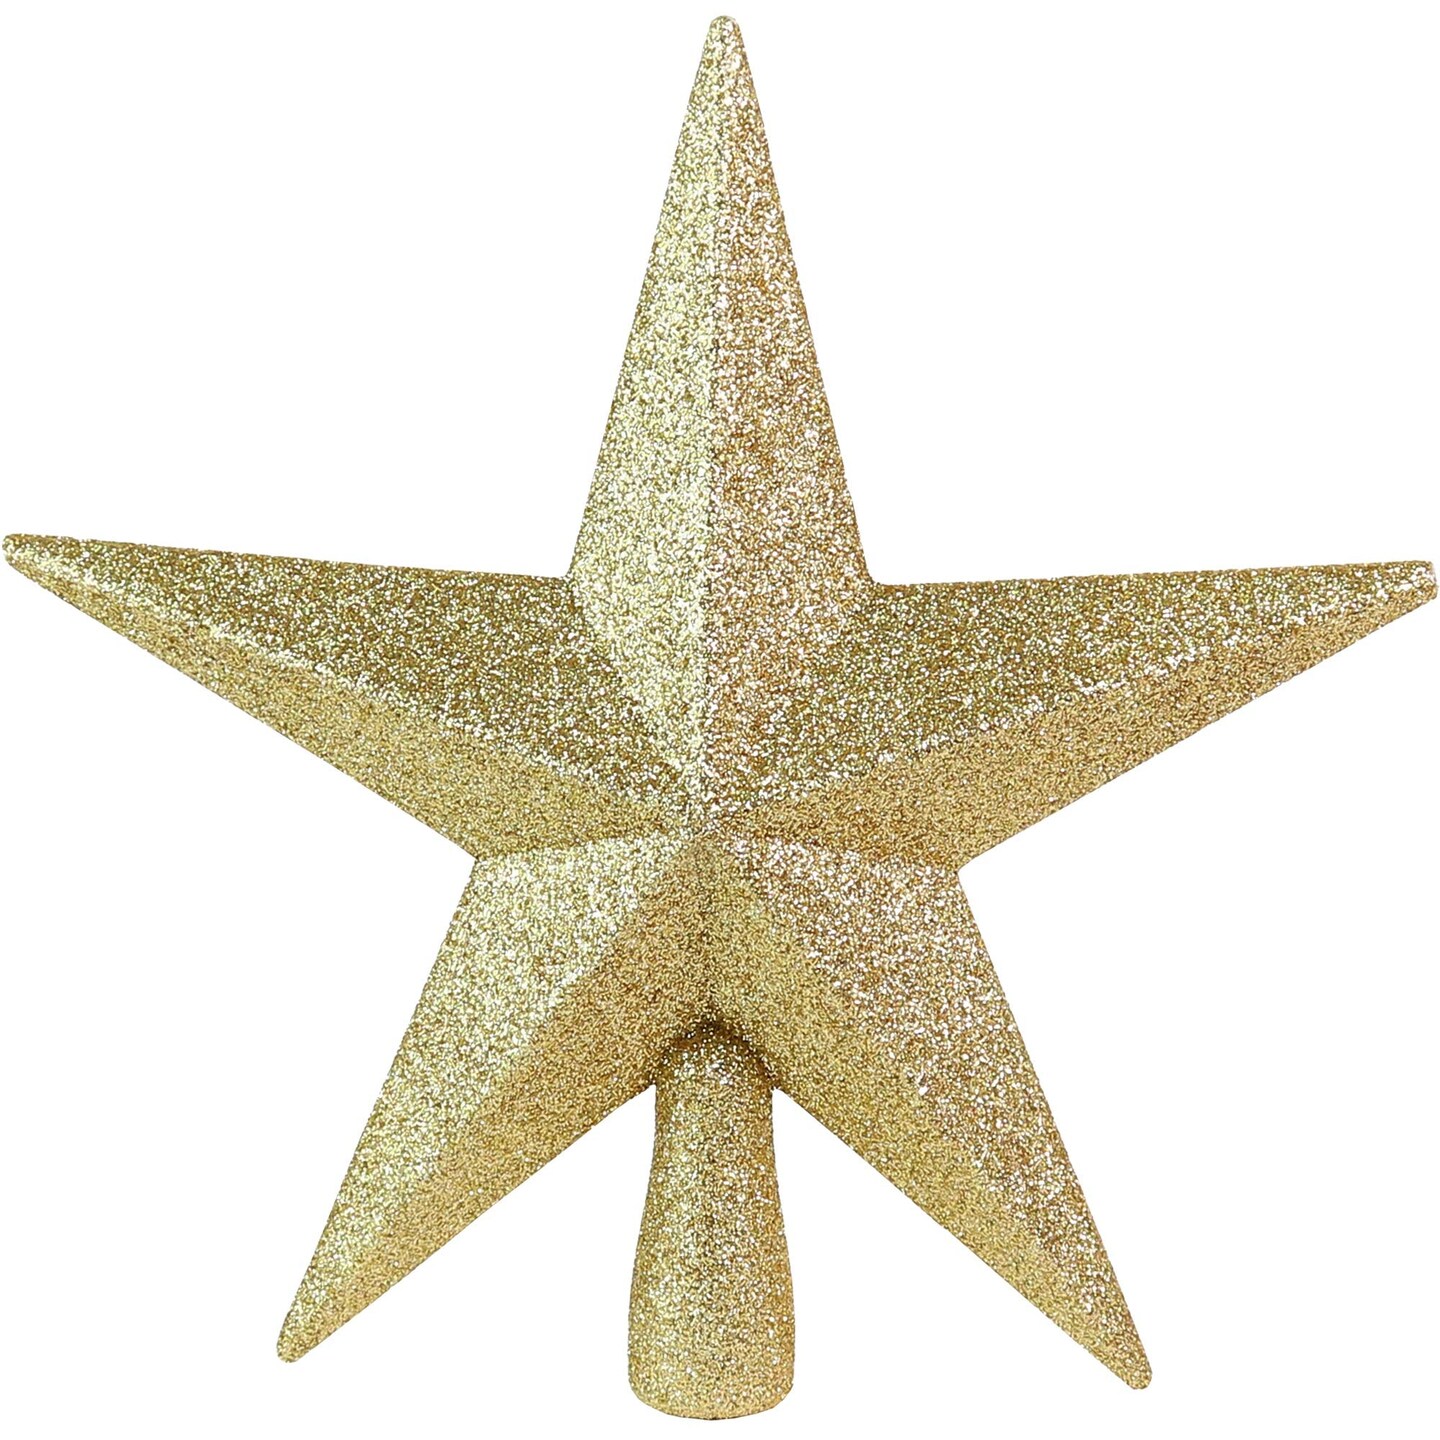 Ornativity Glitter Star Tree Topper - Christmas Decorative Holiday Bethlehem Star Ornament